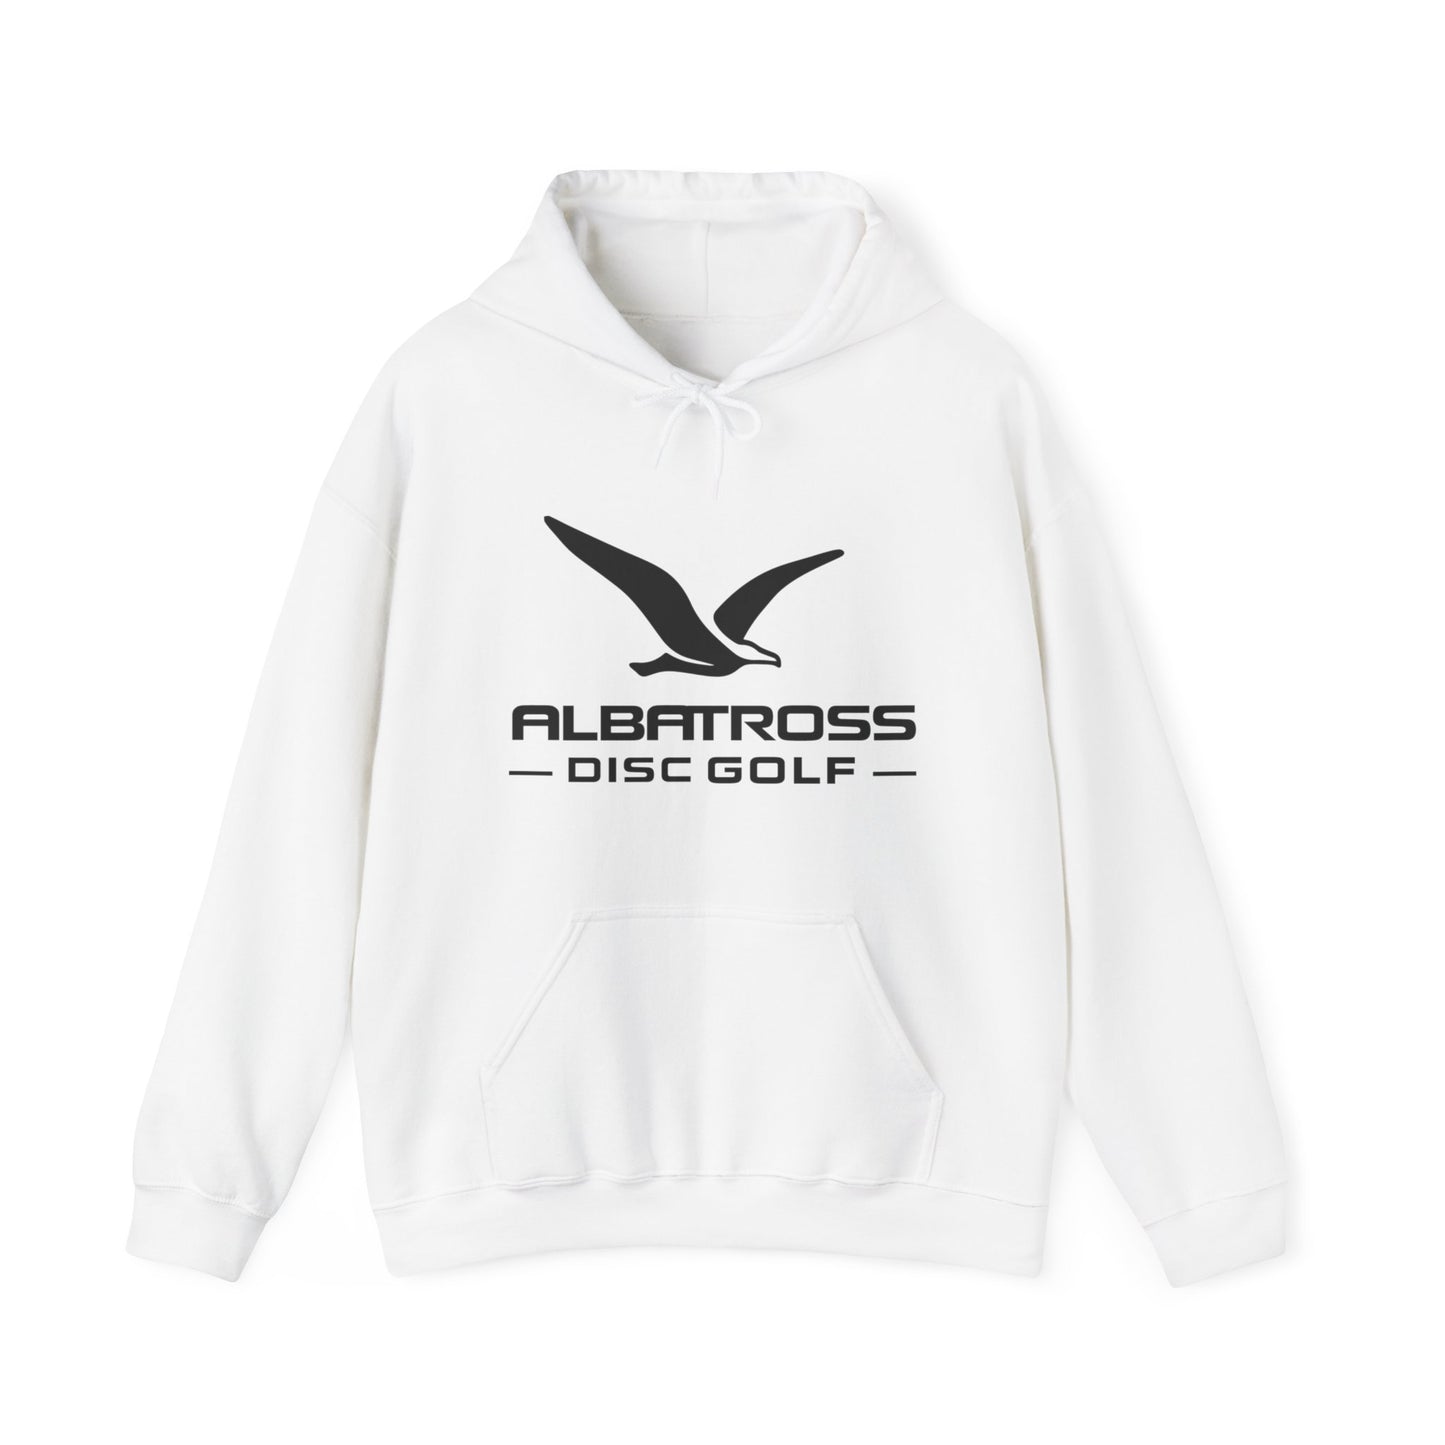 Classic Albatross